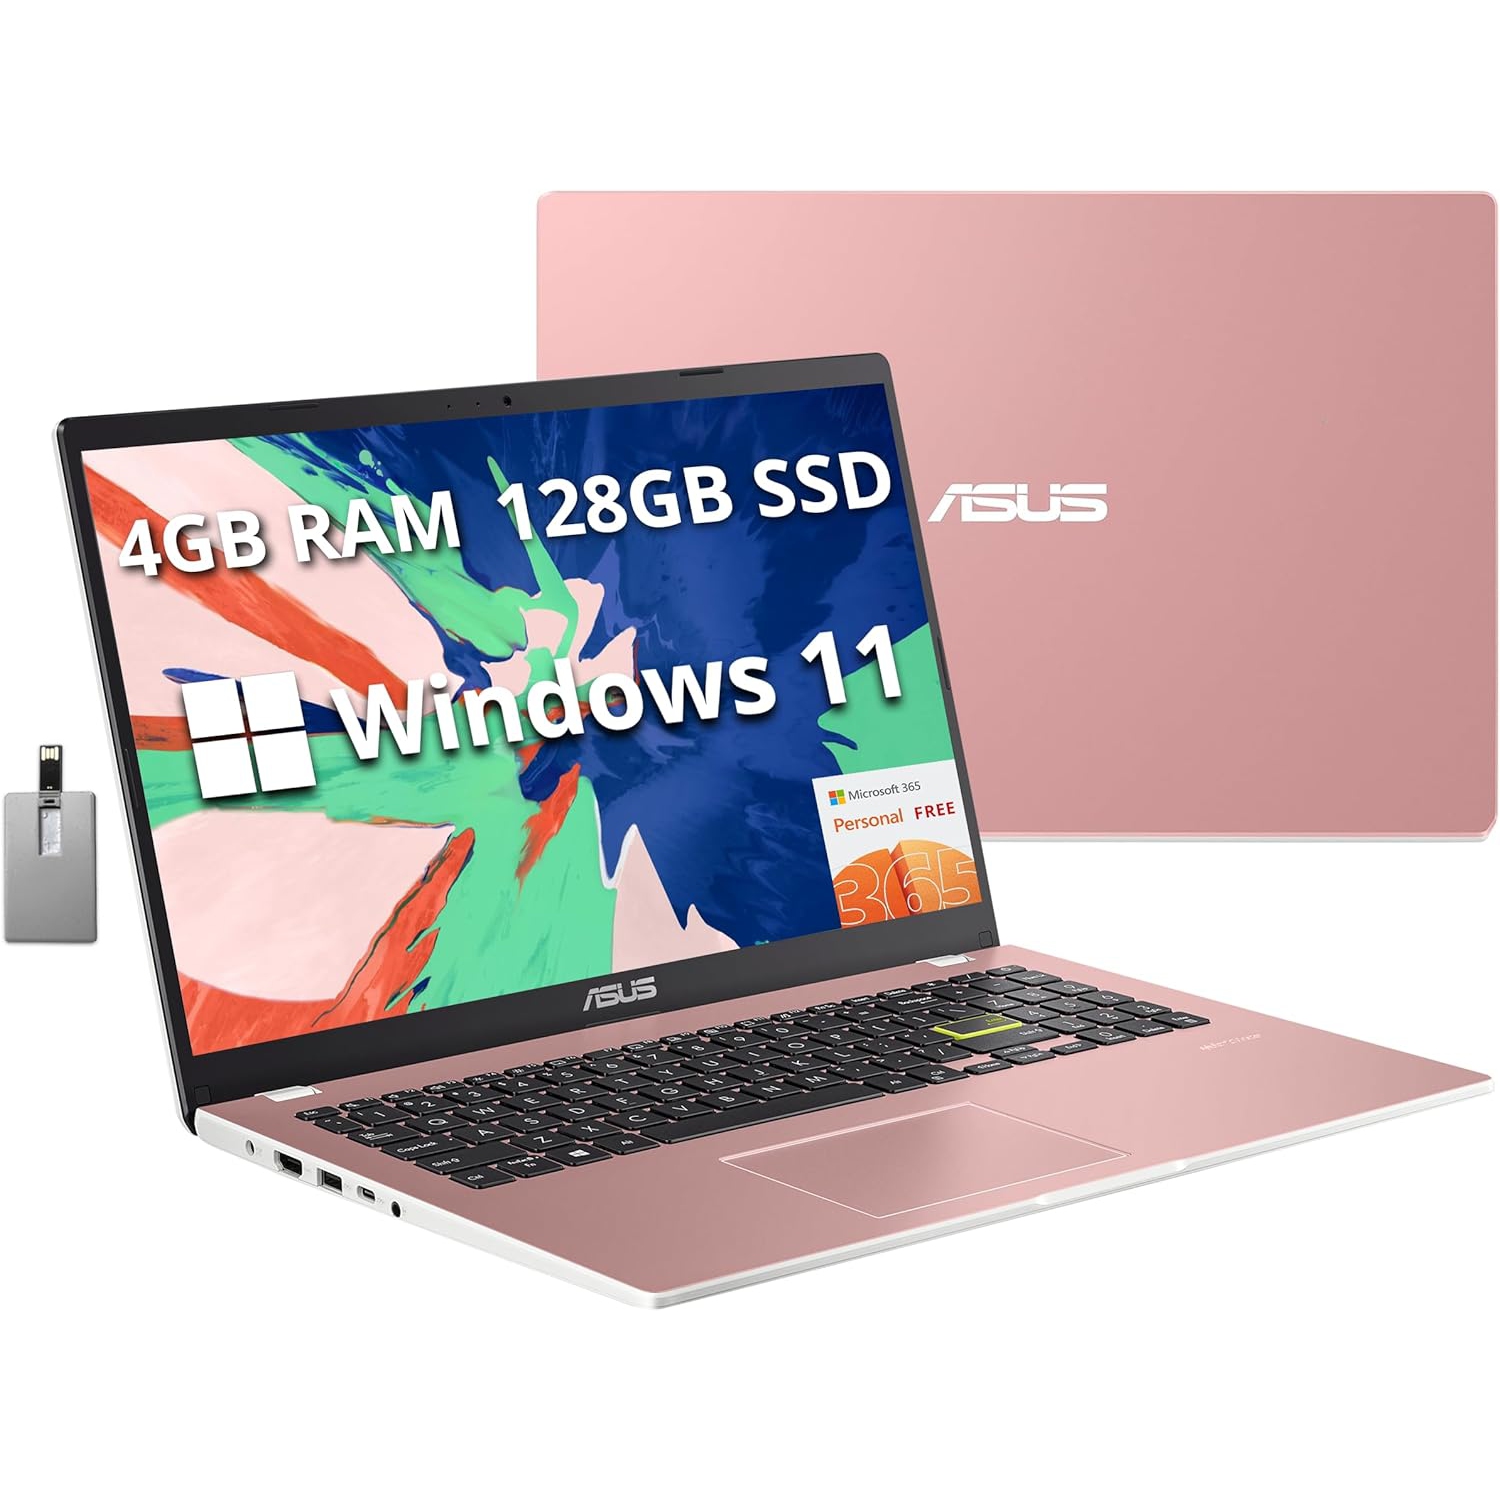 ASUS Vivobook Go 15.6" FHD Laptop, Intel Pentium Silver N6000, 128GB SSD, 4GB RAM, Intel HD Graphics, Webcam, HDMI, 1 Year Office 365, Win 11, Pink, 32GB Hotface USB Card